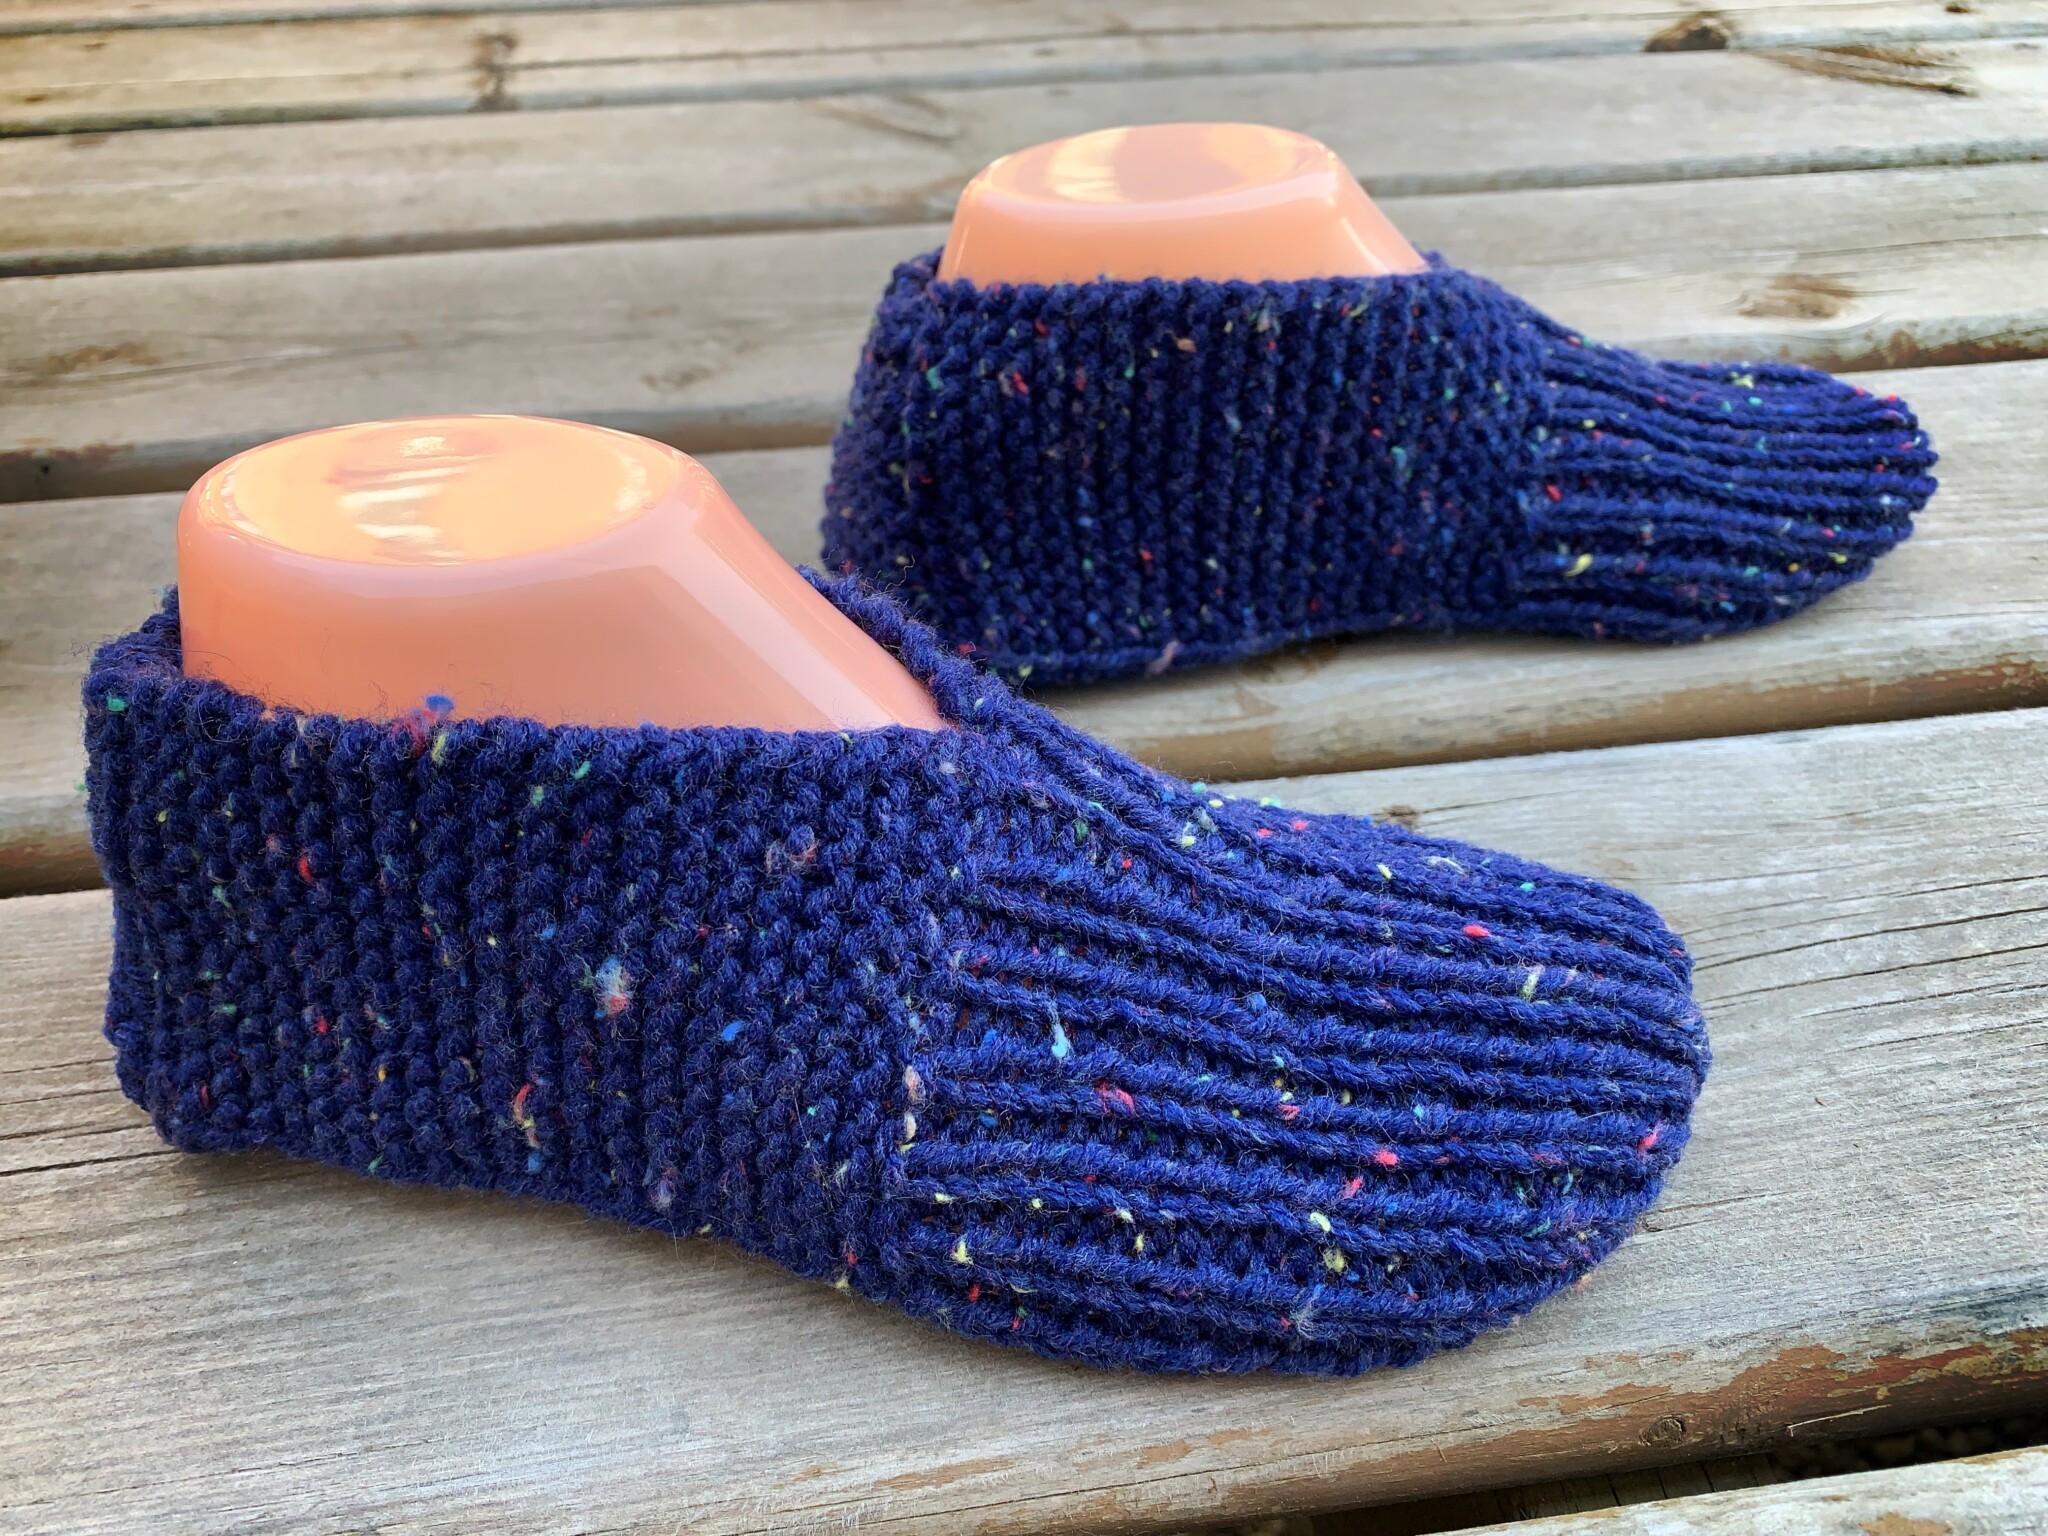 Eight Slipper Styles to Knit - KweenBee.com